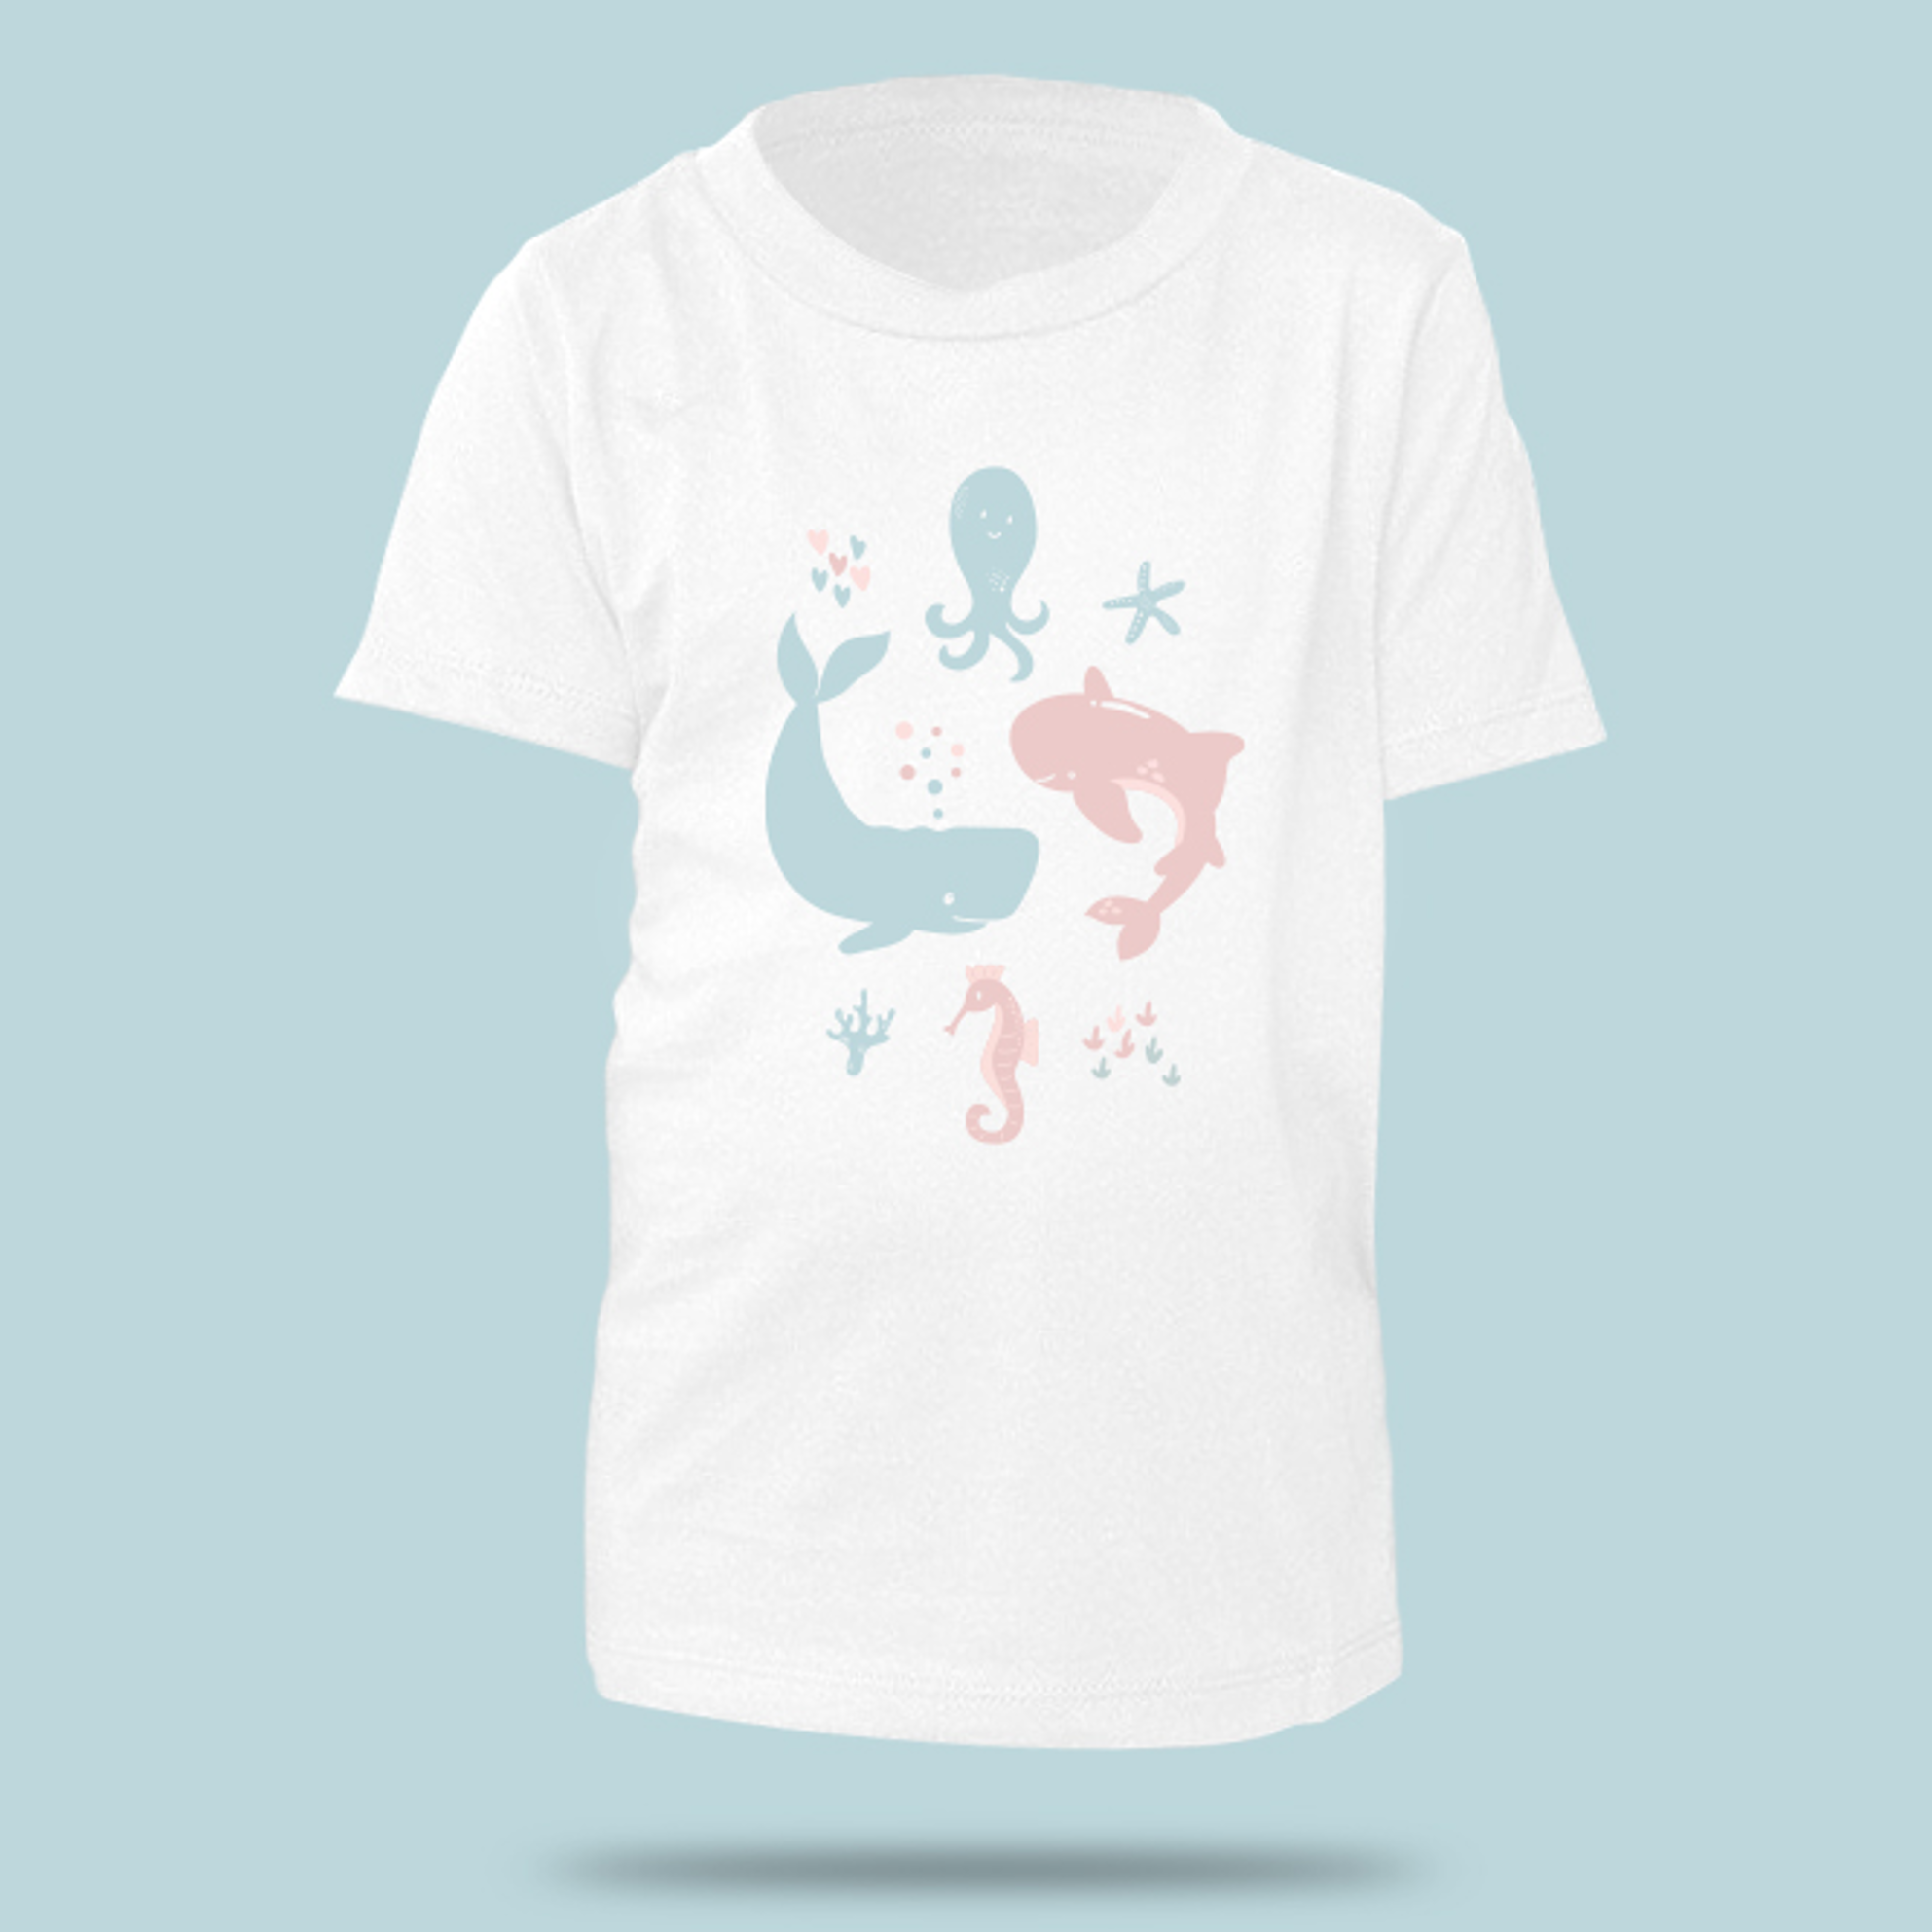 Toddler ocean creatures t-shirt - WWF-Canada